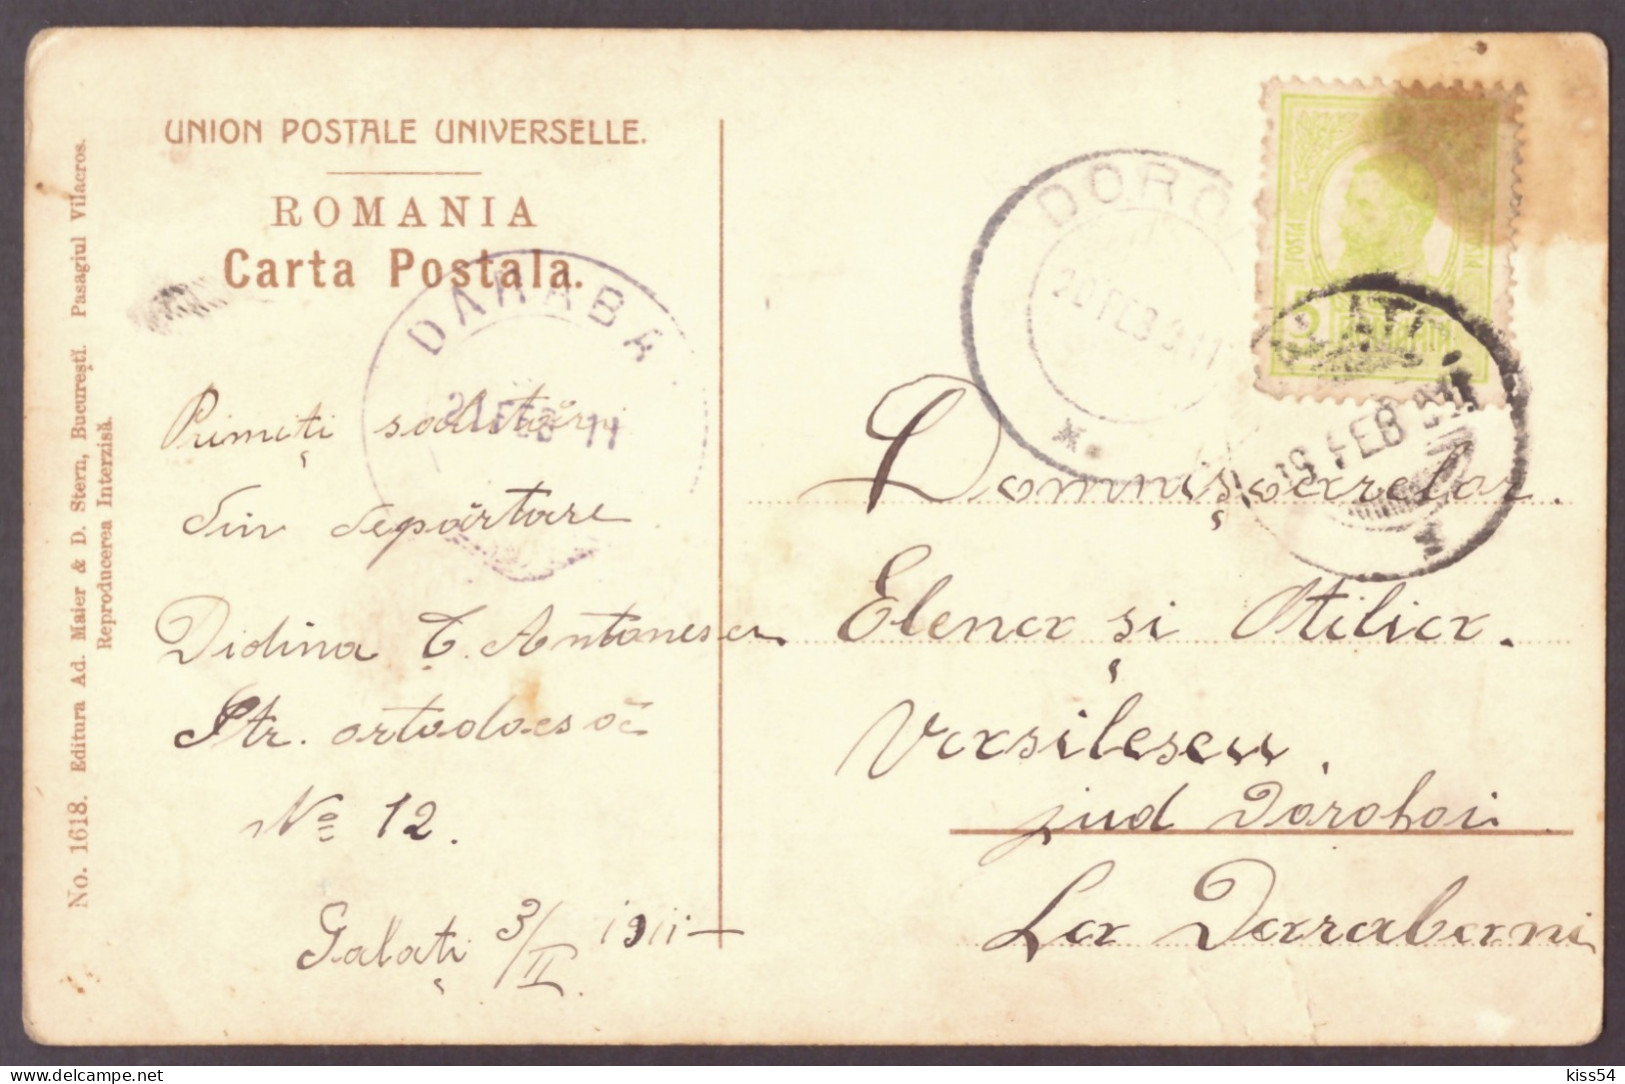 RO 40 - 23917 GALATI, Street Stores, Romania - Old Postcard - Used - 1911 - Romania